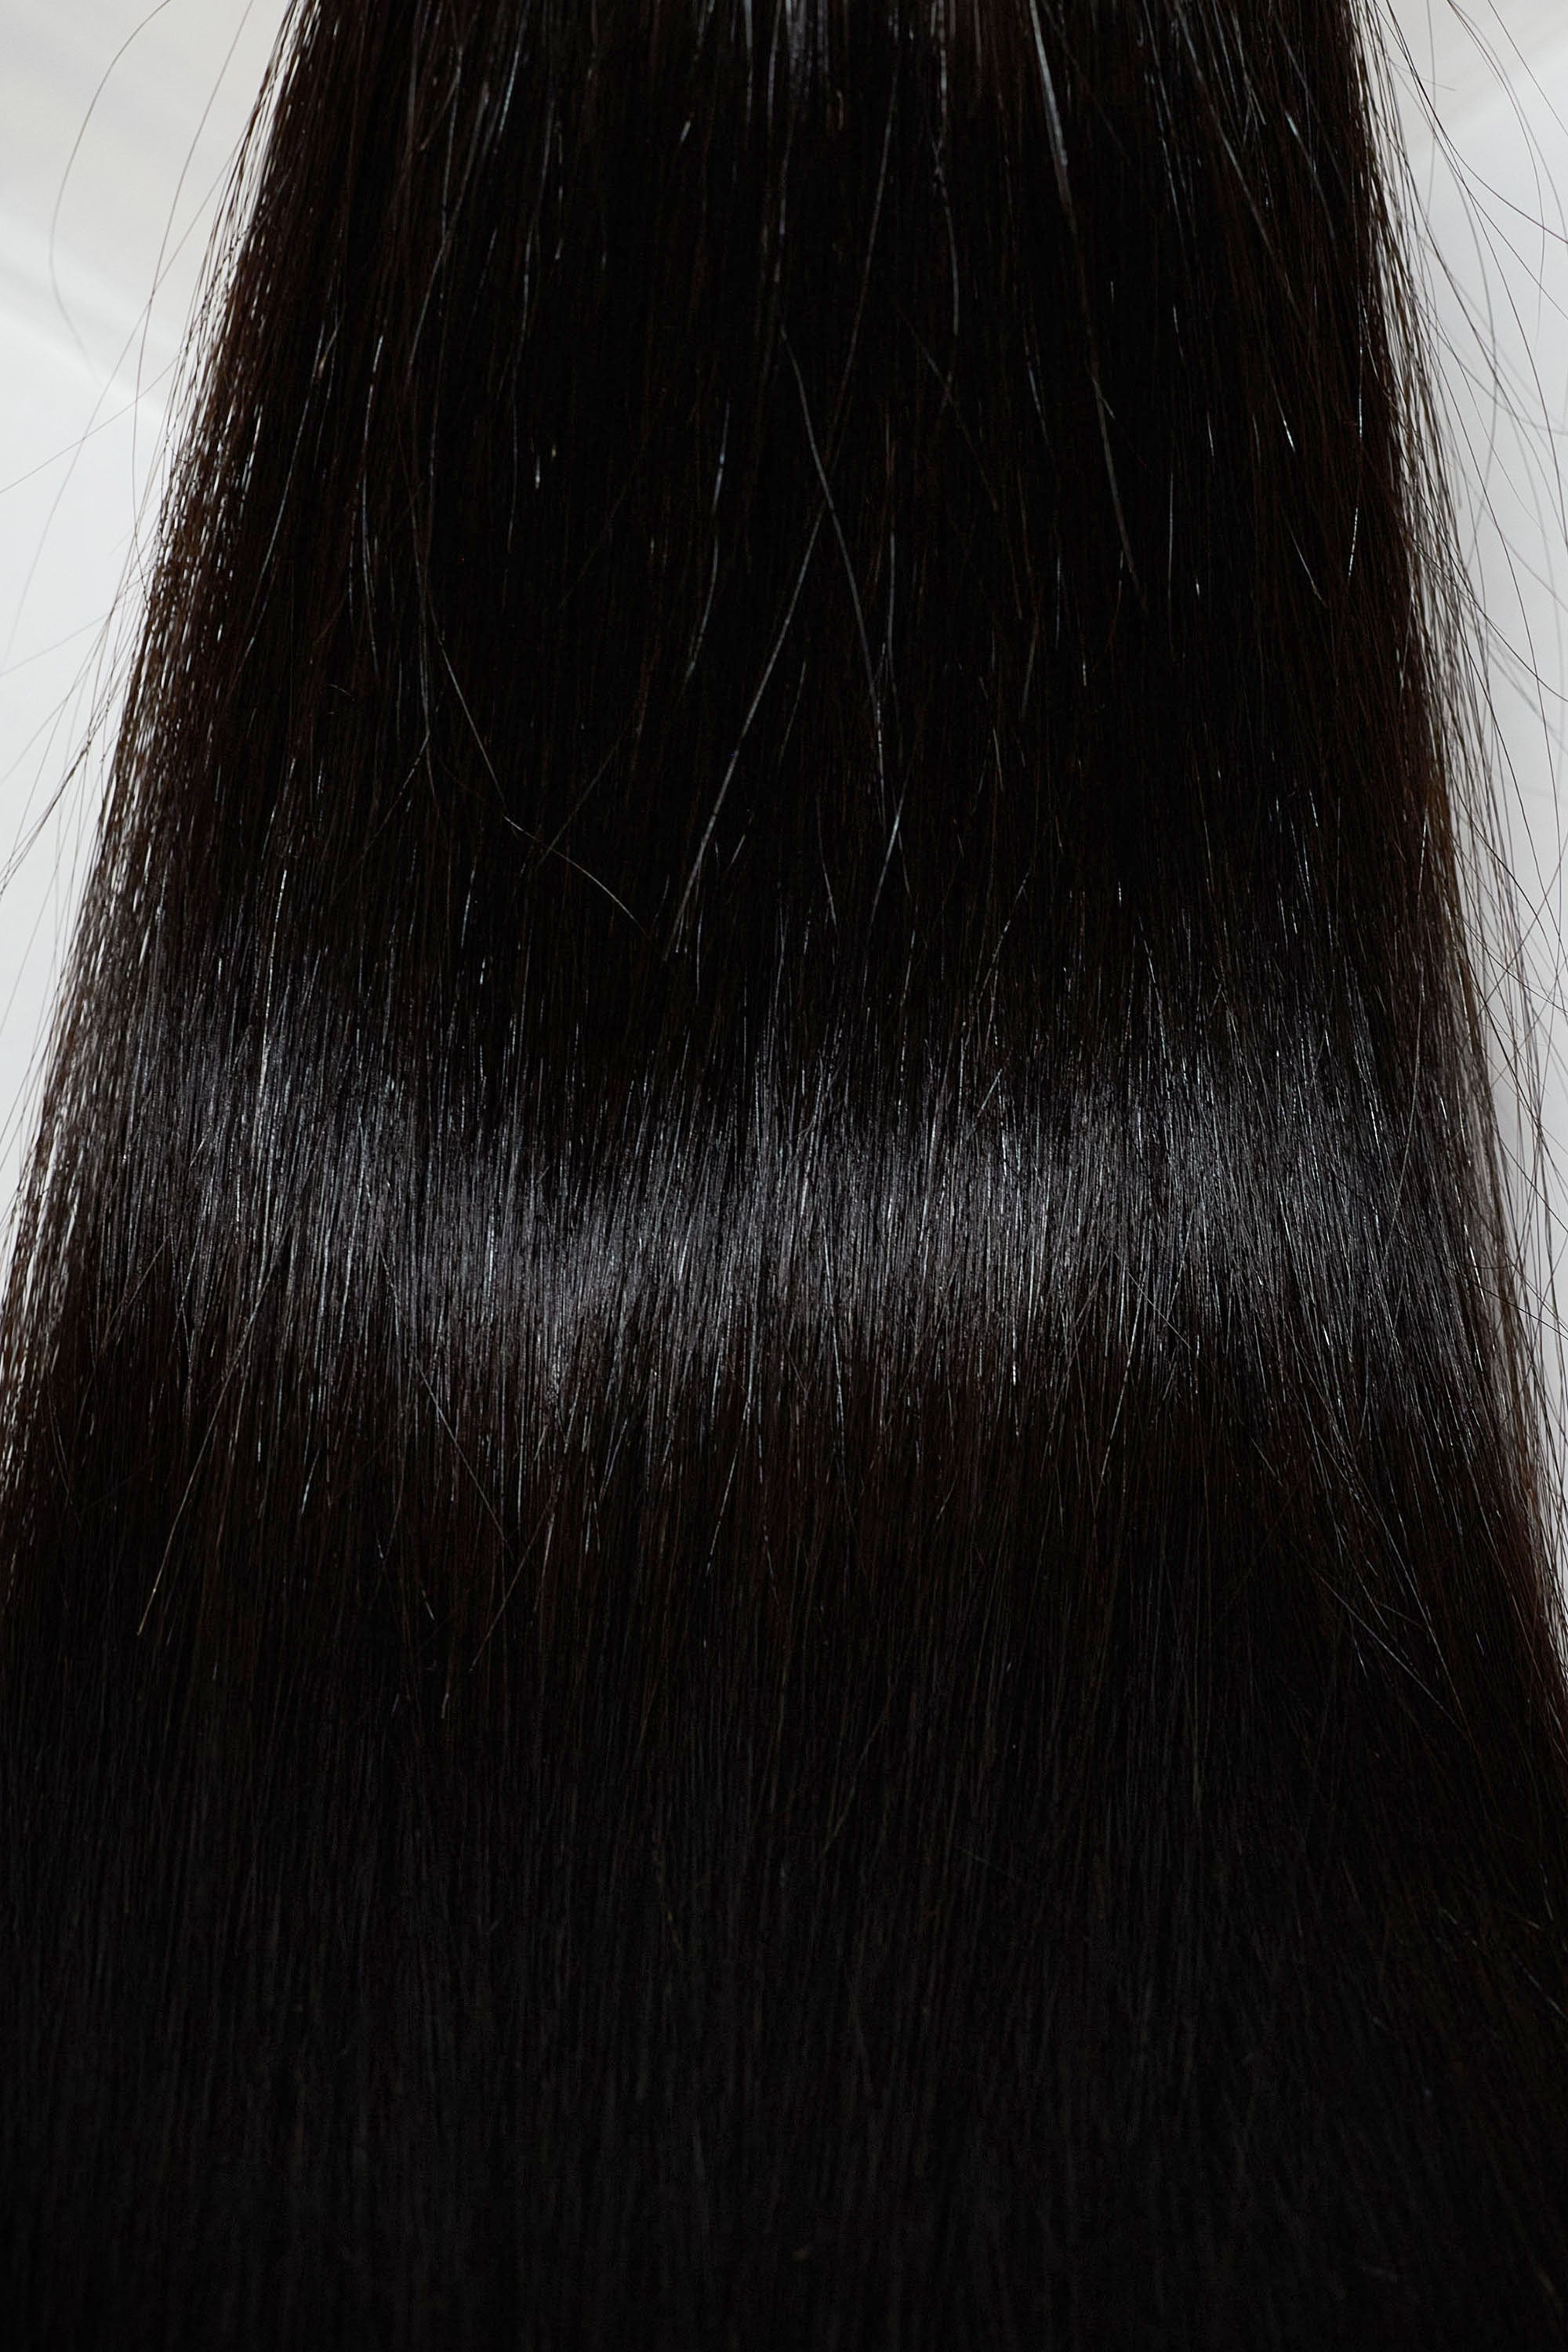 Behair professional Keratin Tip "Premium" 16" (40cm) Natural Straight Jet Black #1 - 25g (Micro - 0.5g each pcs) hair extensions